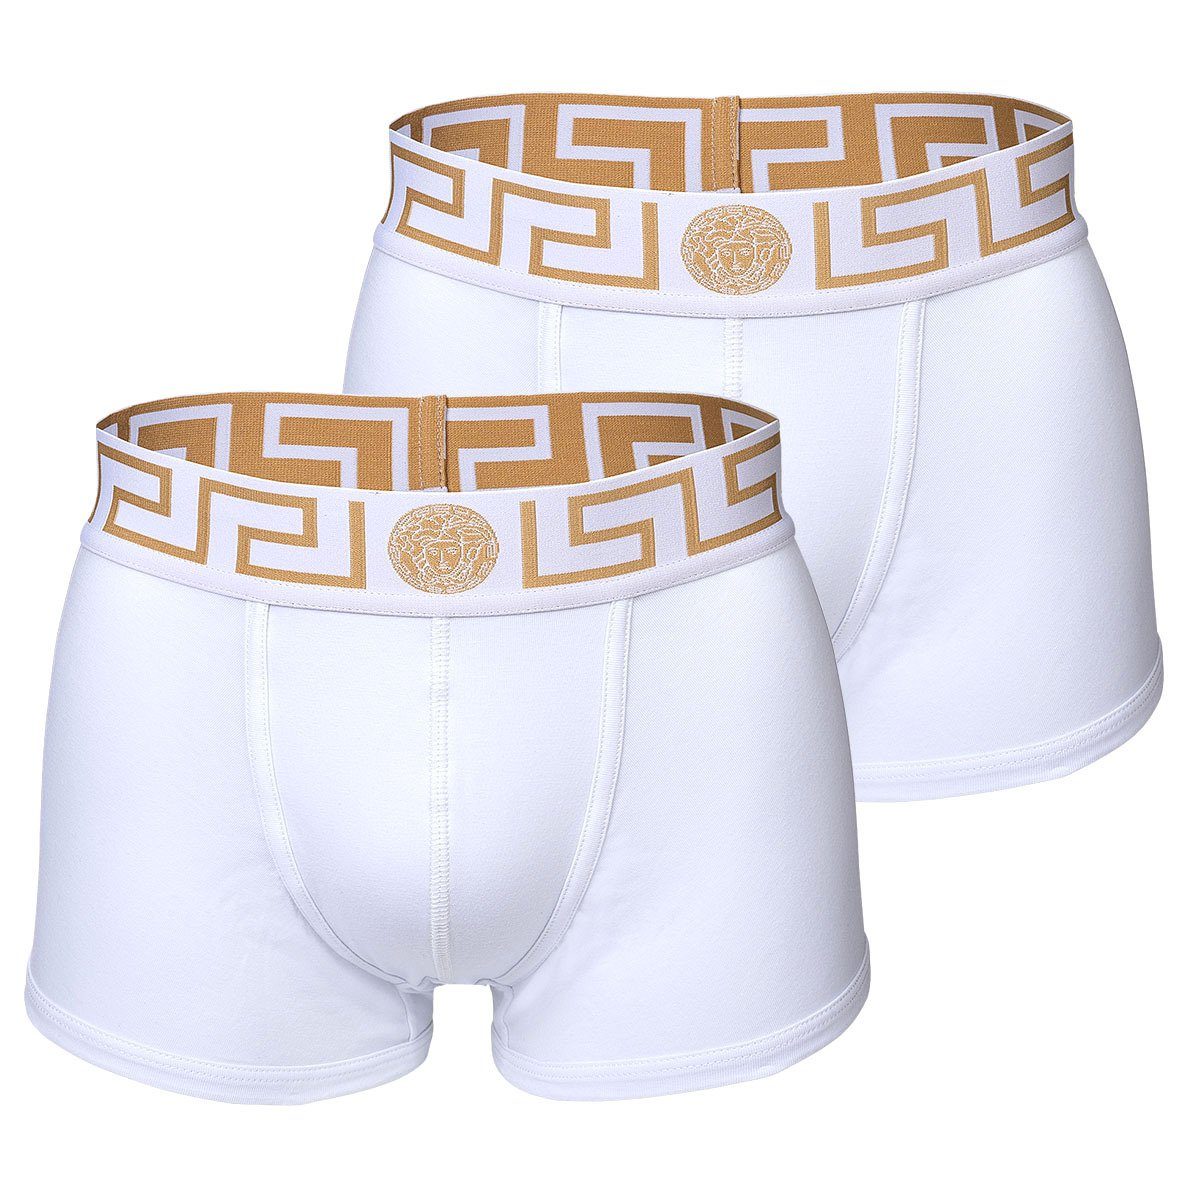 Versace Boxer Herren Boxer Shorts, 2er Pack - Trunk Weiß/Gold